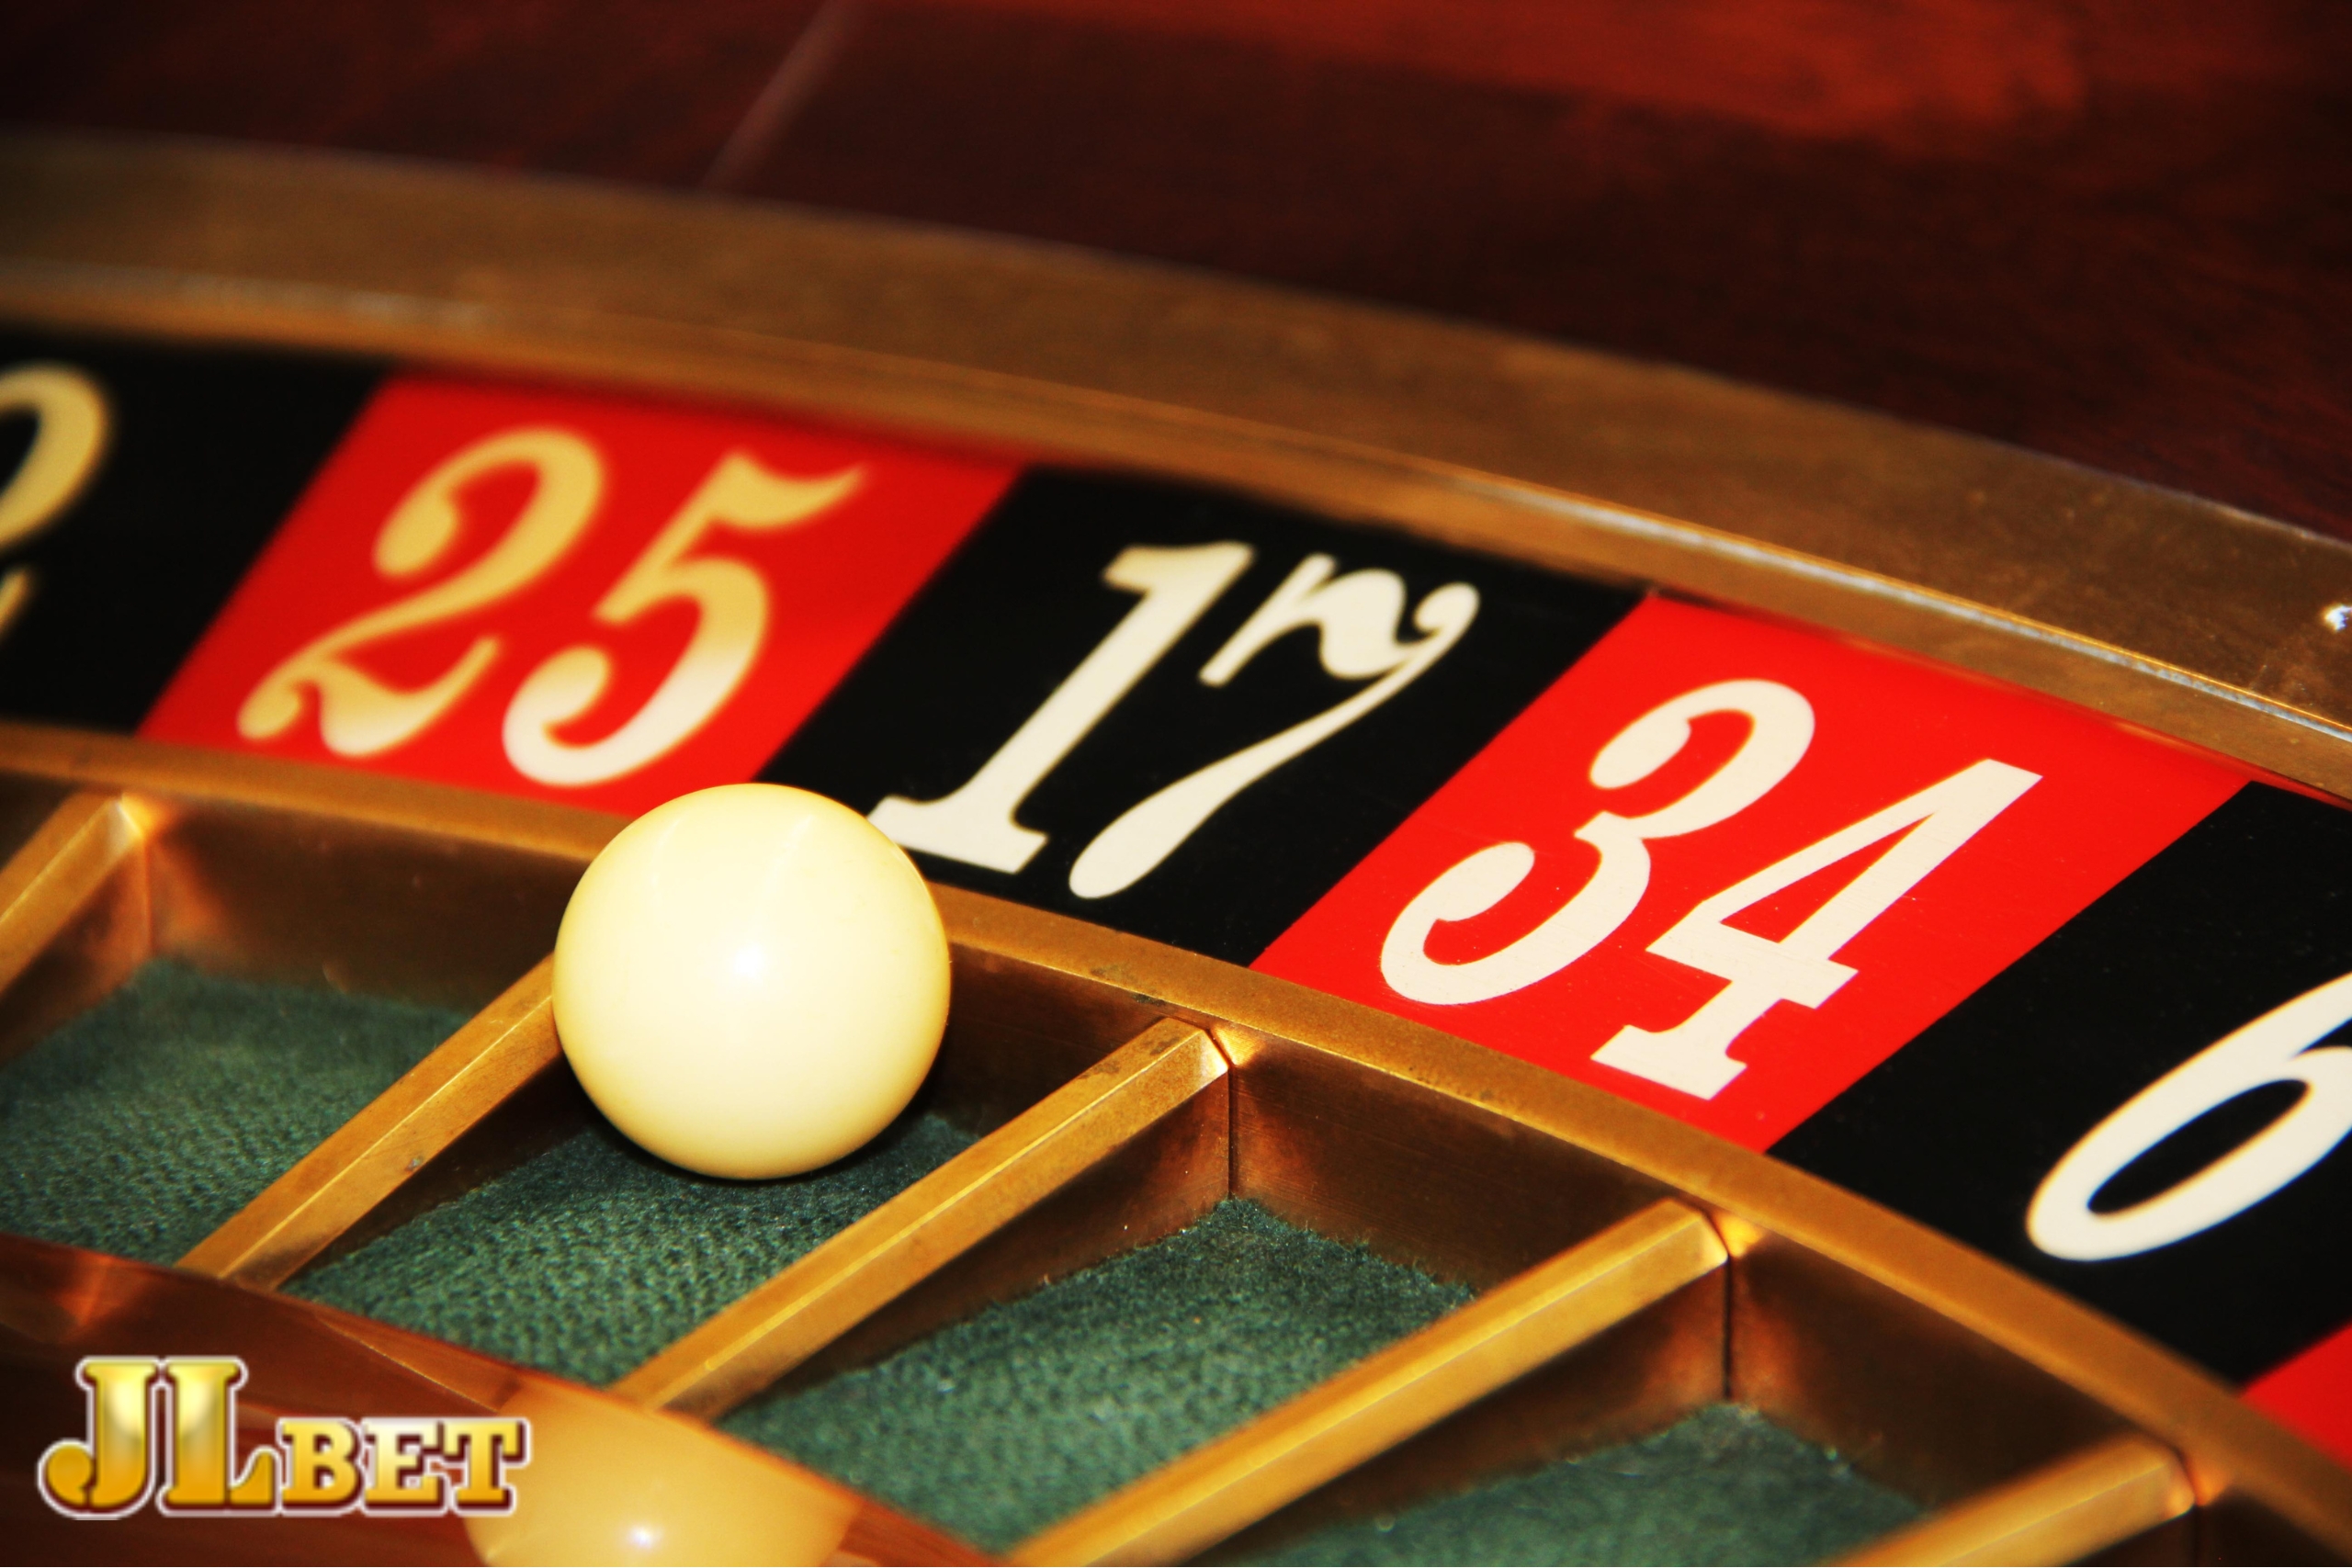 Elevate Your Gambling Experience With JLBET VIP Membership